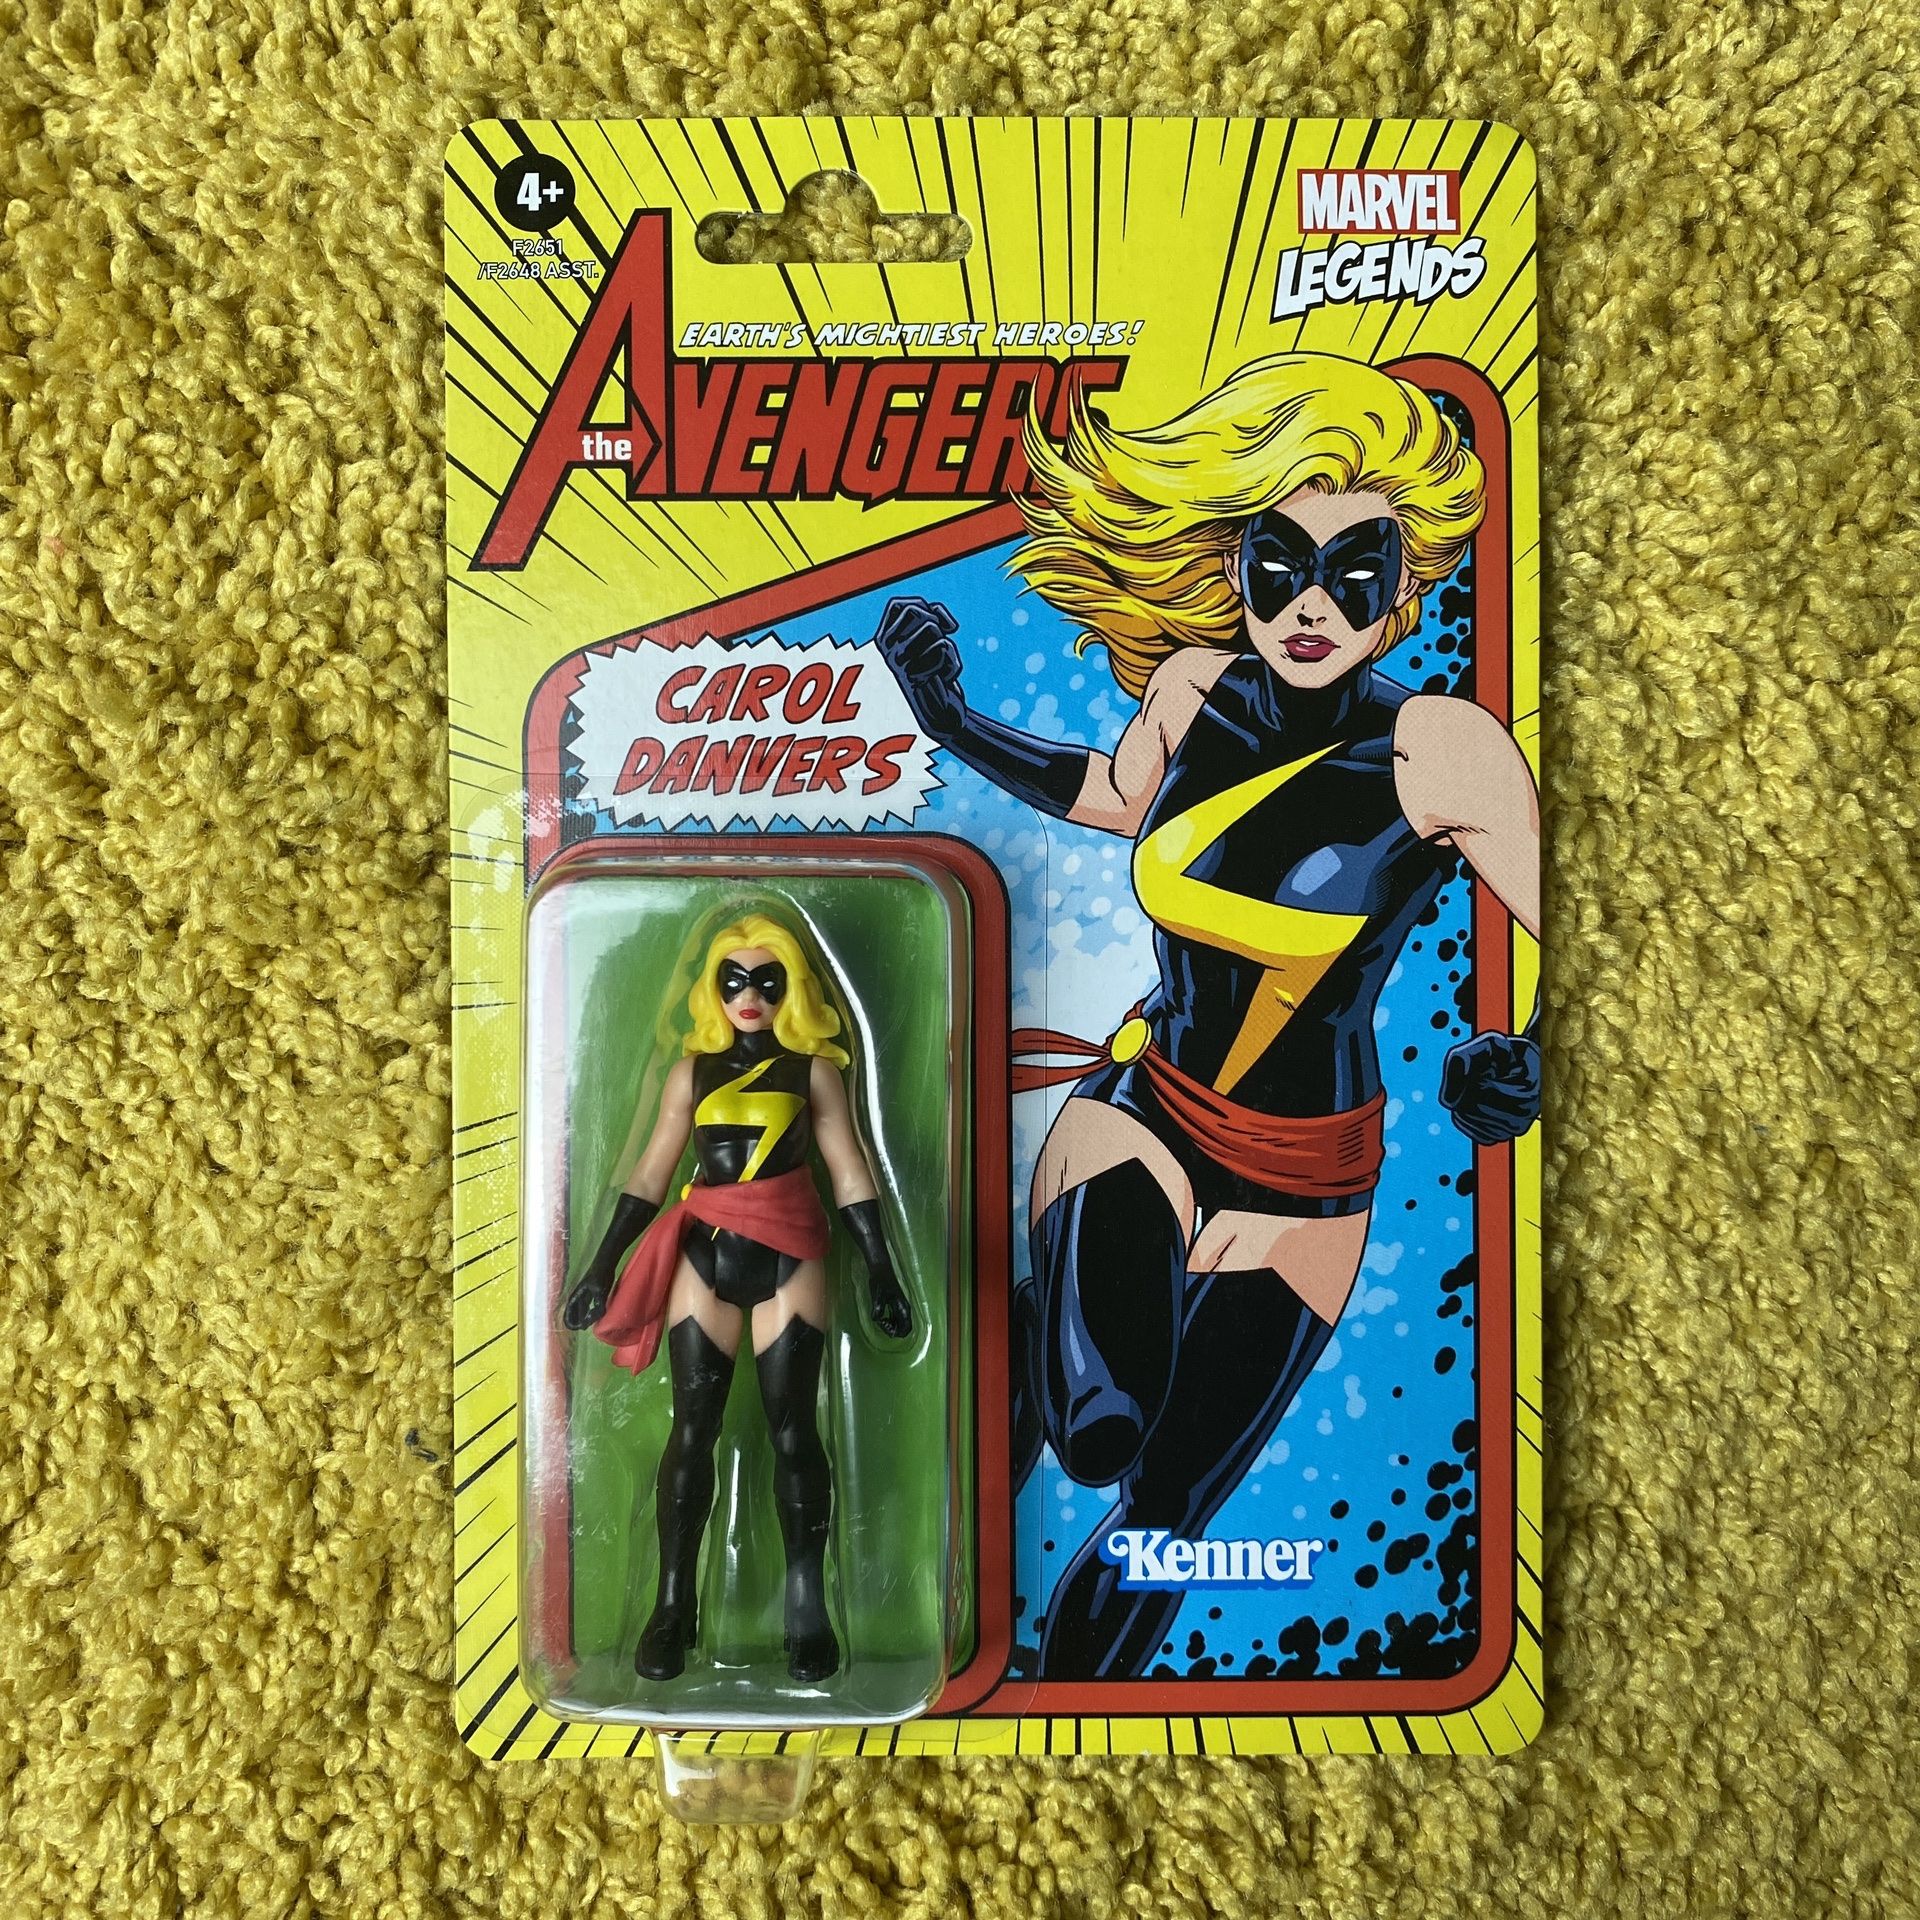 Marvel Legends Avengers Captain Marvel Vinyl Toy Retro Vintage Action Figure By Kenner Hasbro X-Men - BRAND NEW & SEALED